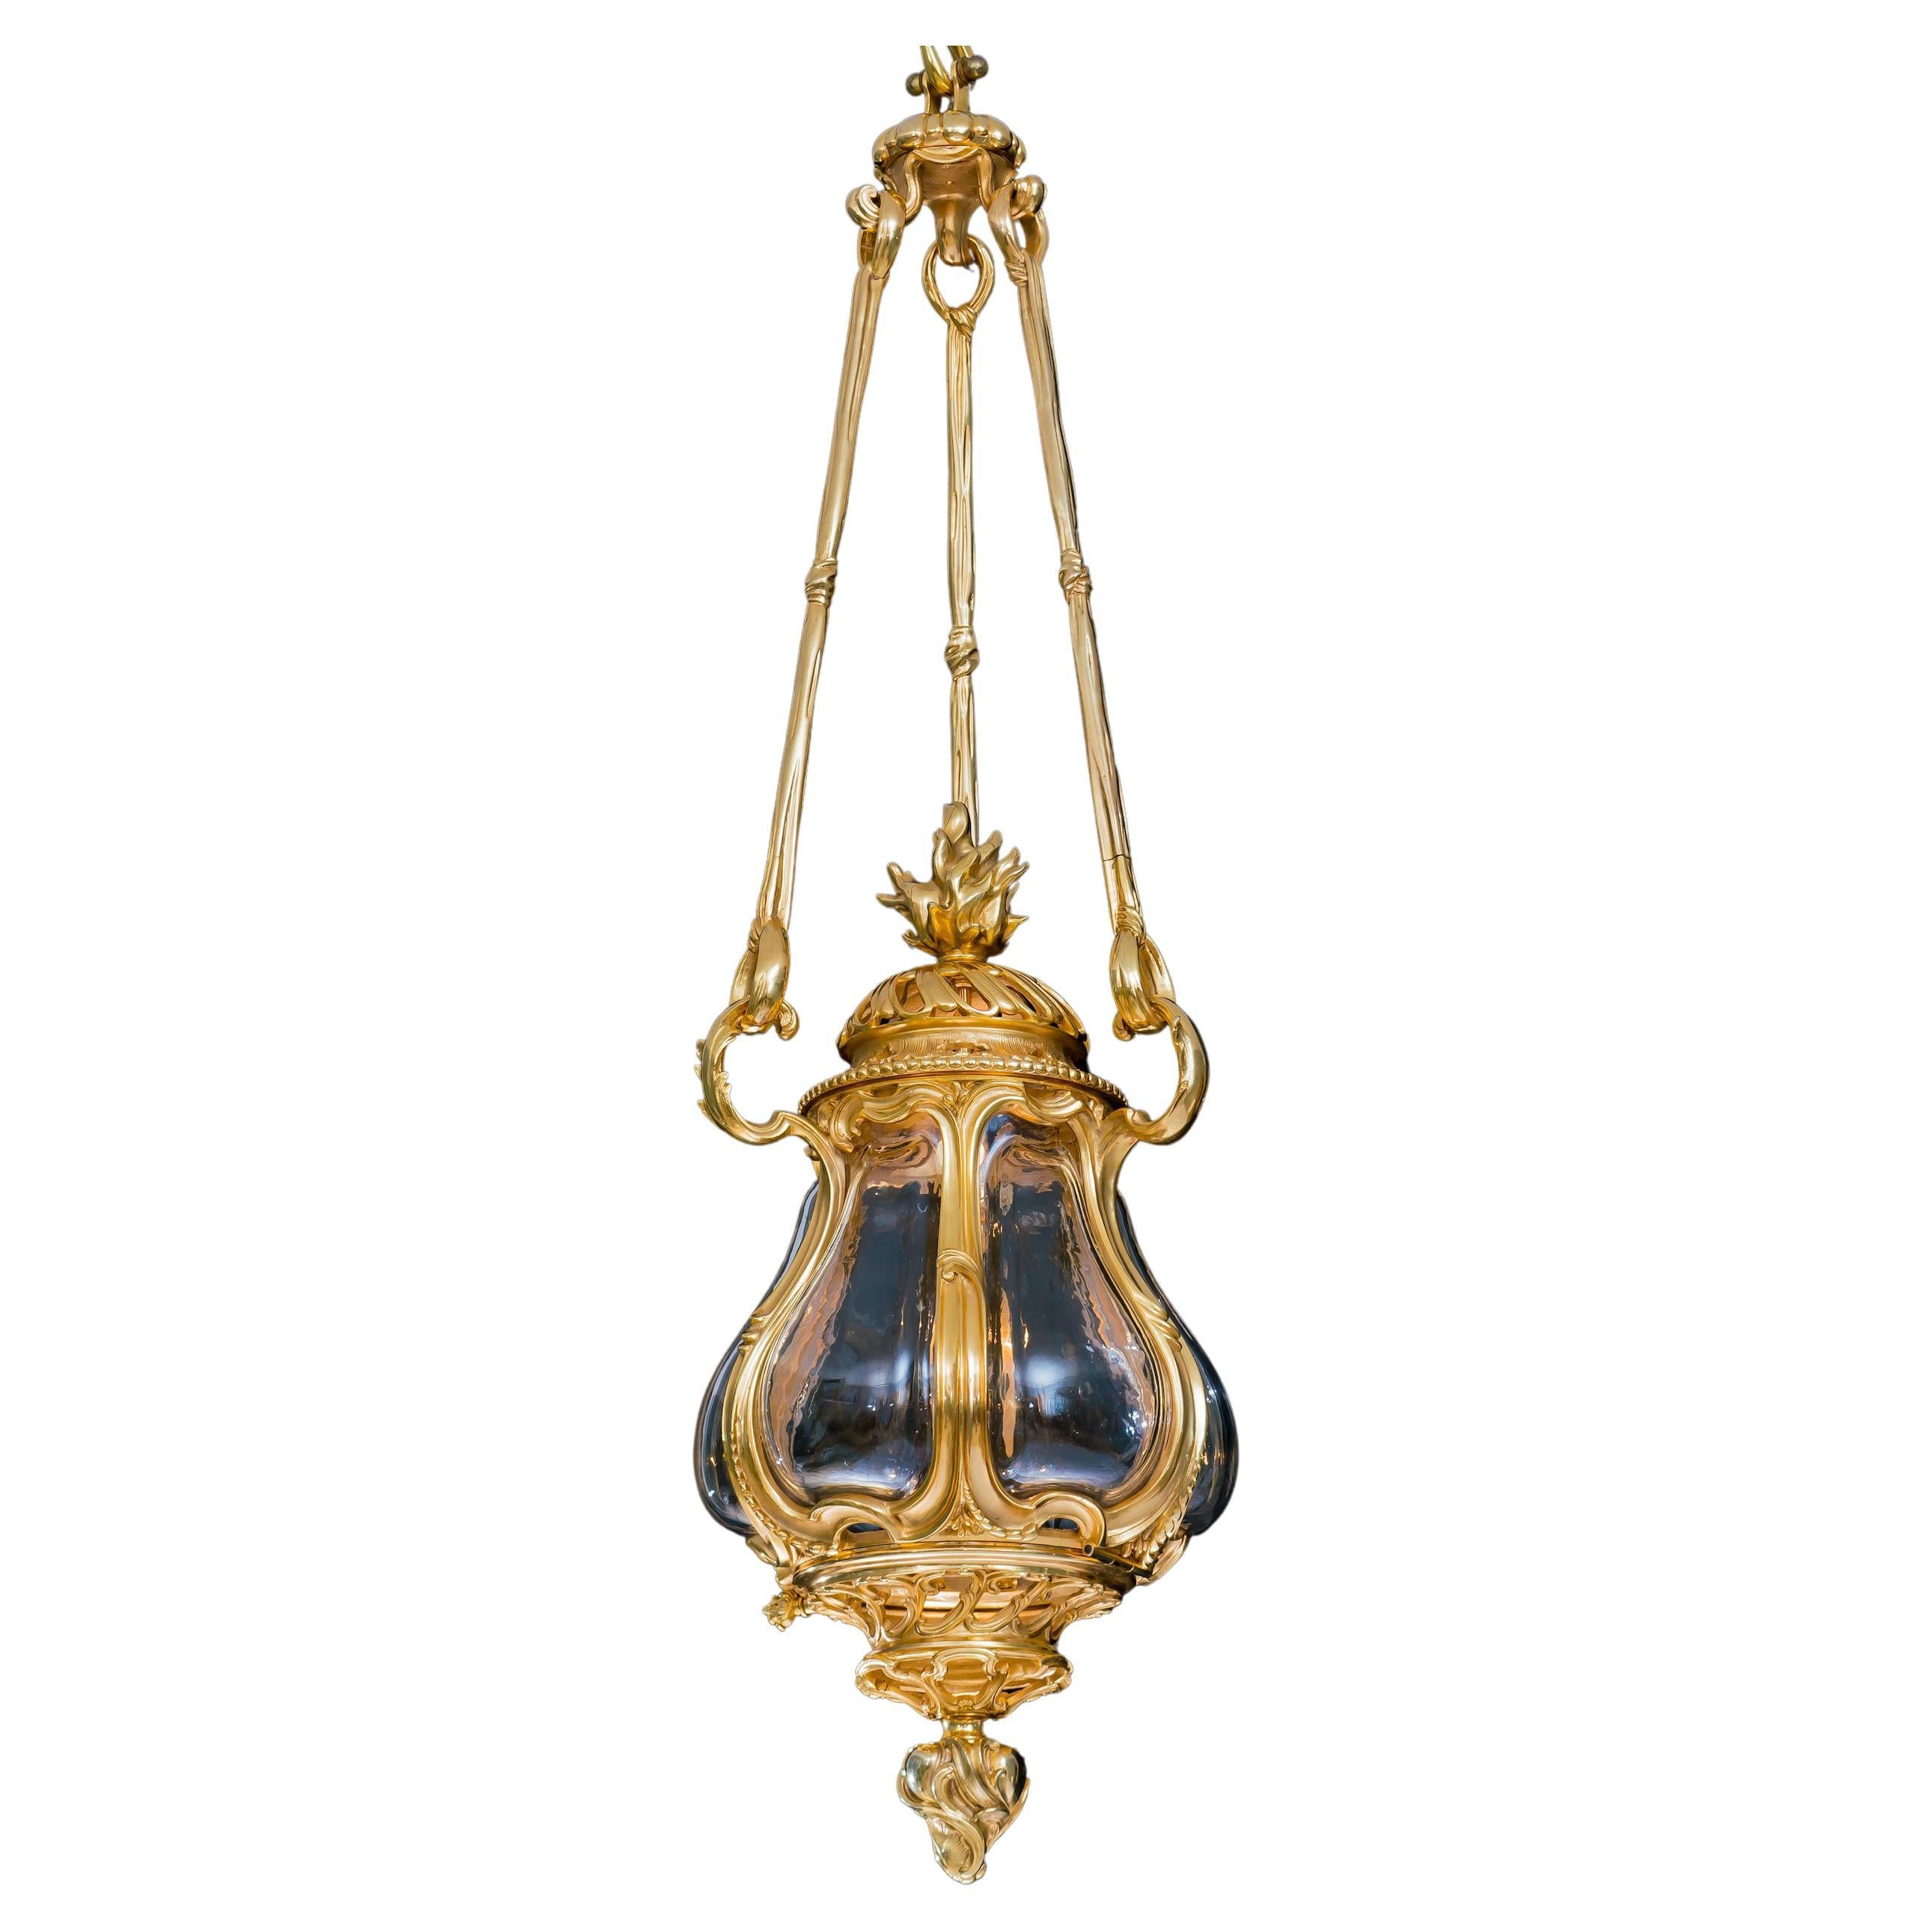 Impressive Belle Époque Lantern in the Louis XV Manner